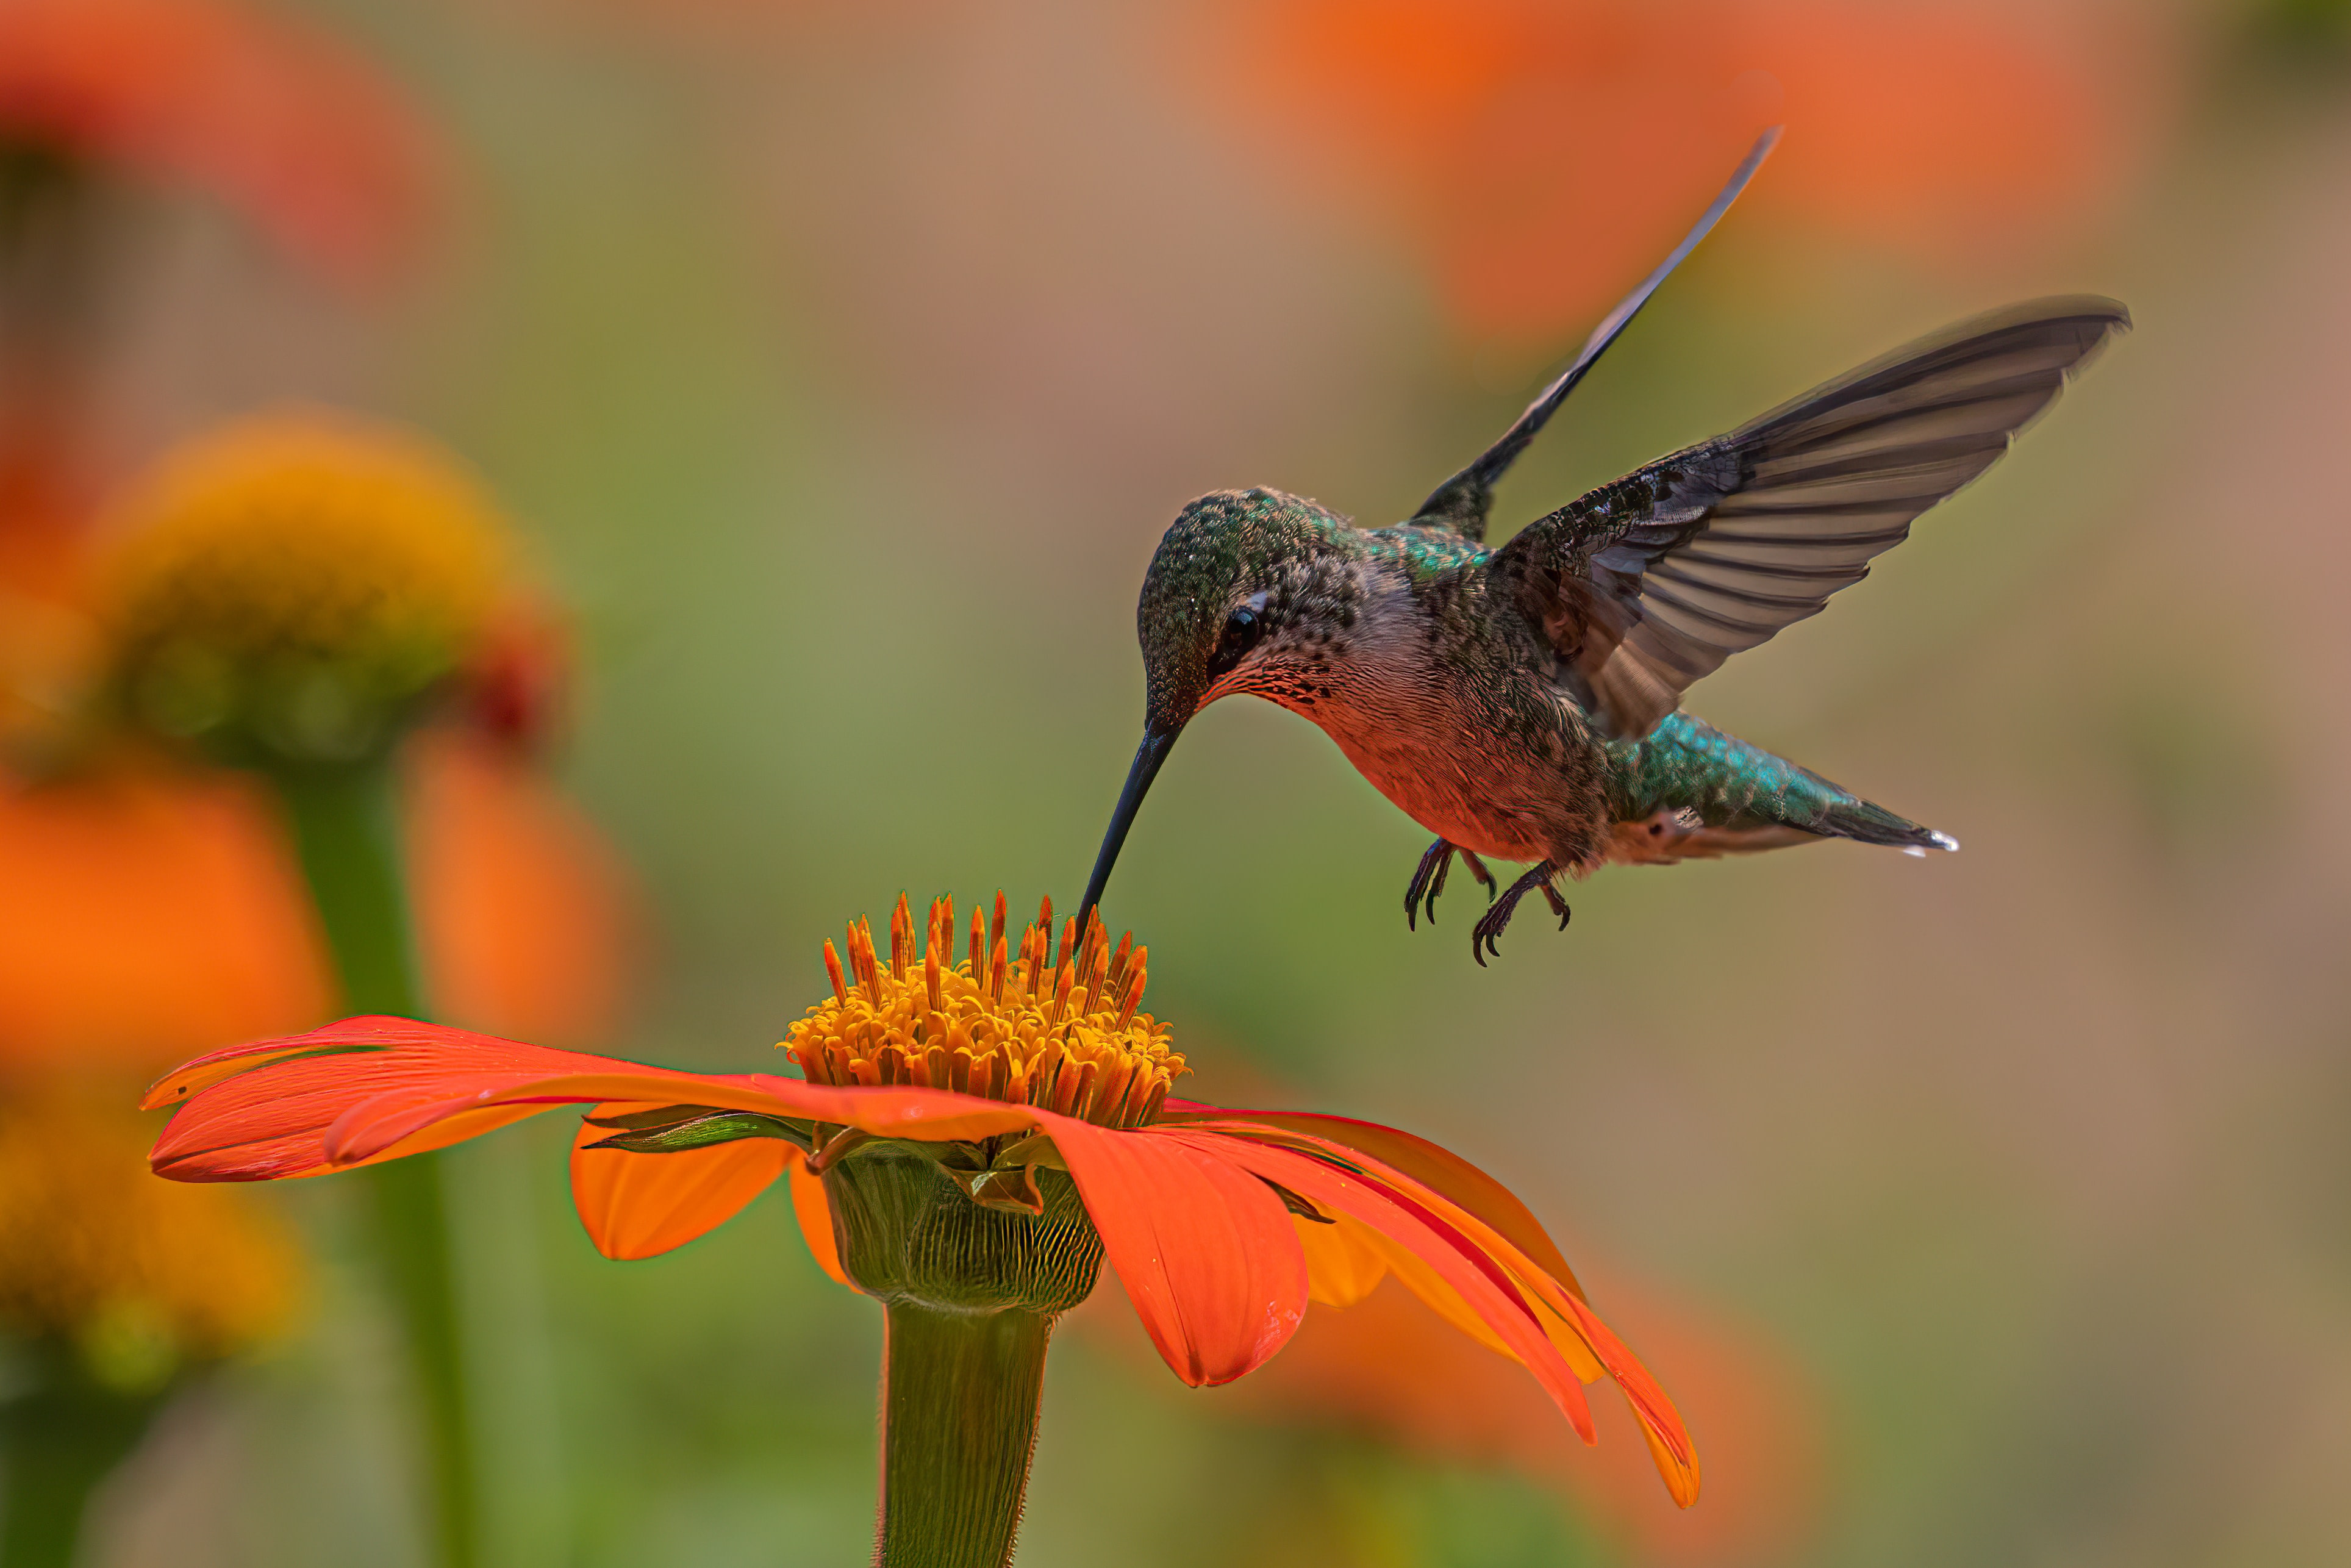 A hummingbird seeping nectar